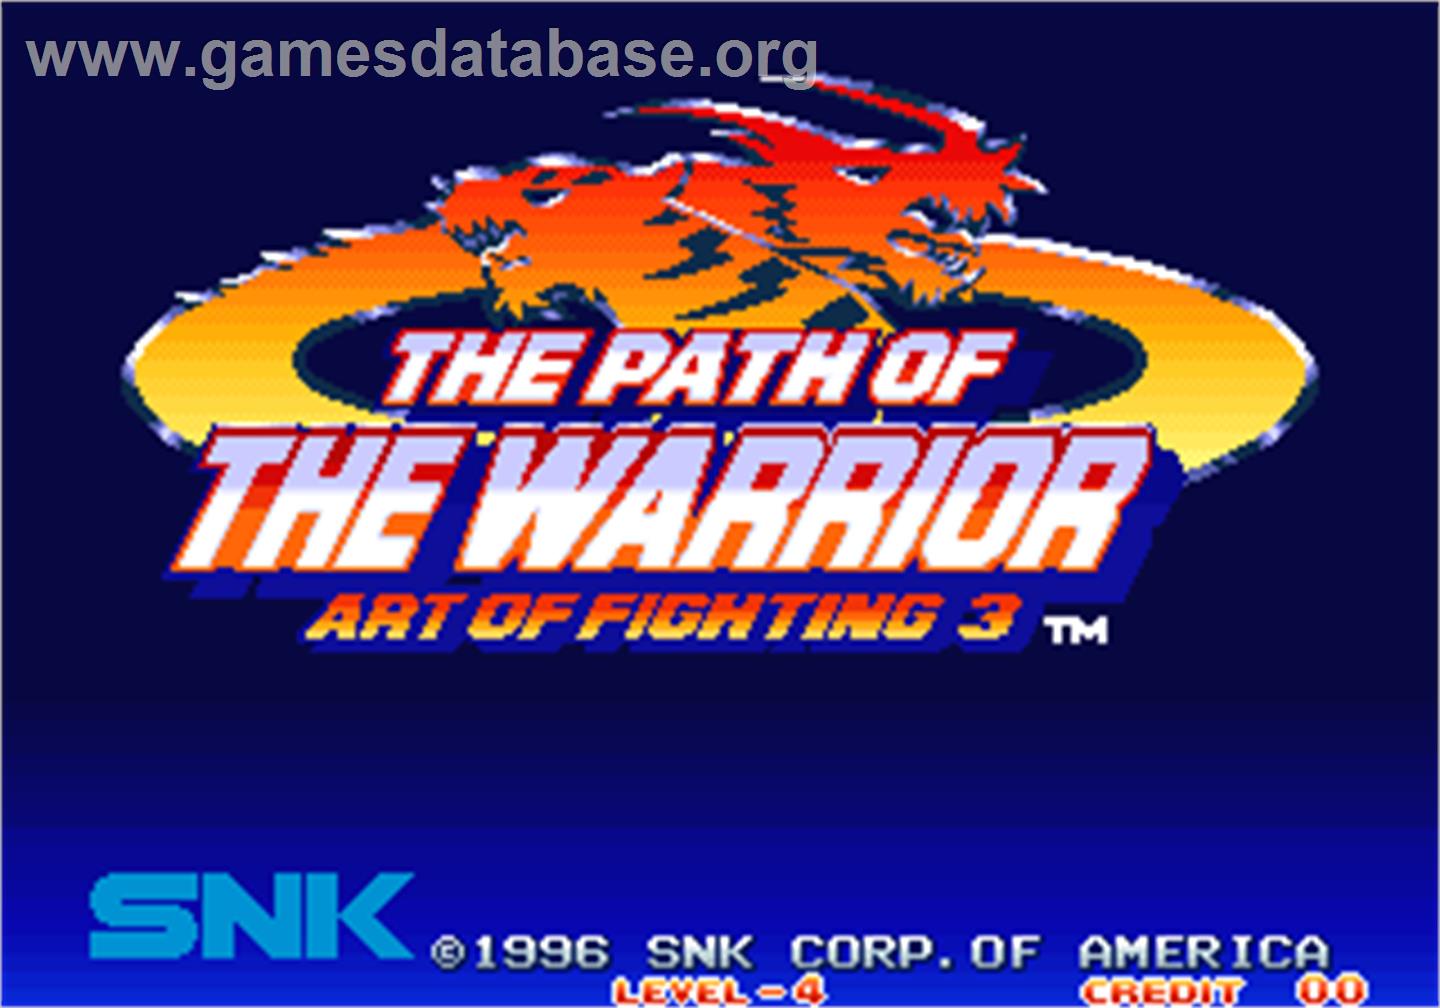 Art of Fighting 3 - The Path of the Warrior / Art of Fighting - Ryuuko no Ken Gaiden - Arcade - Artwork - Title Screen